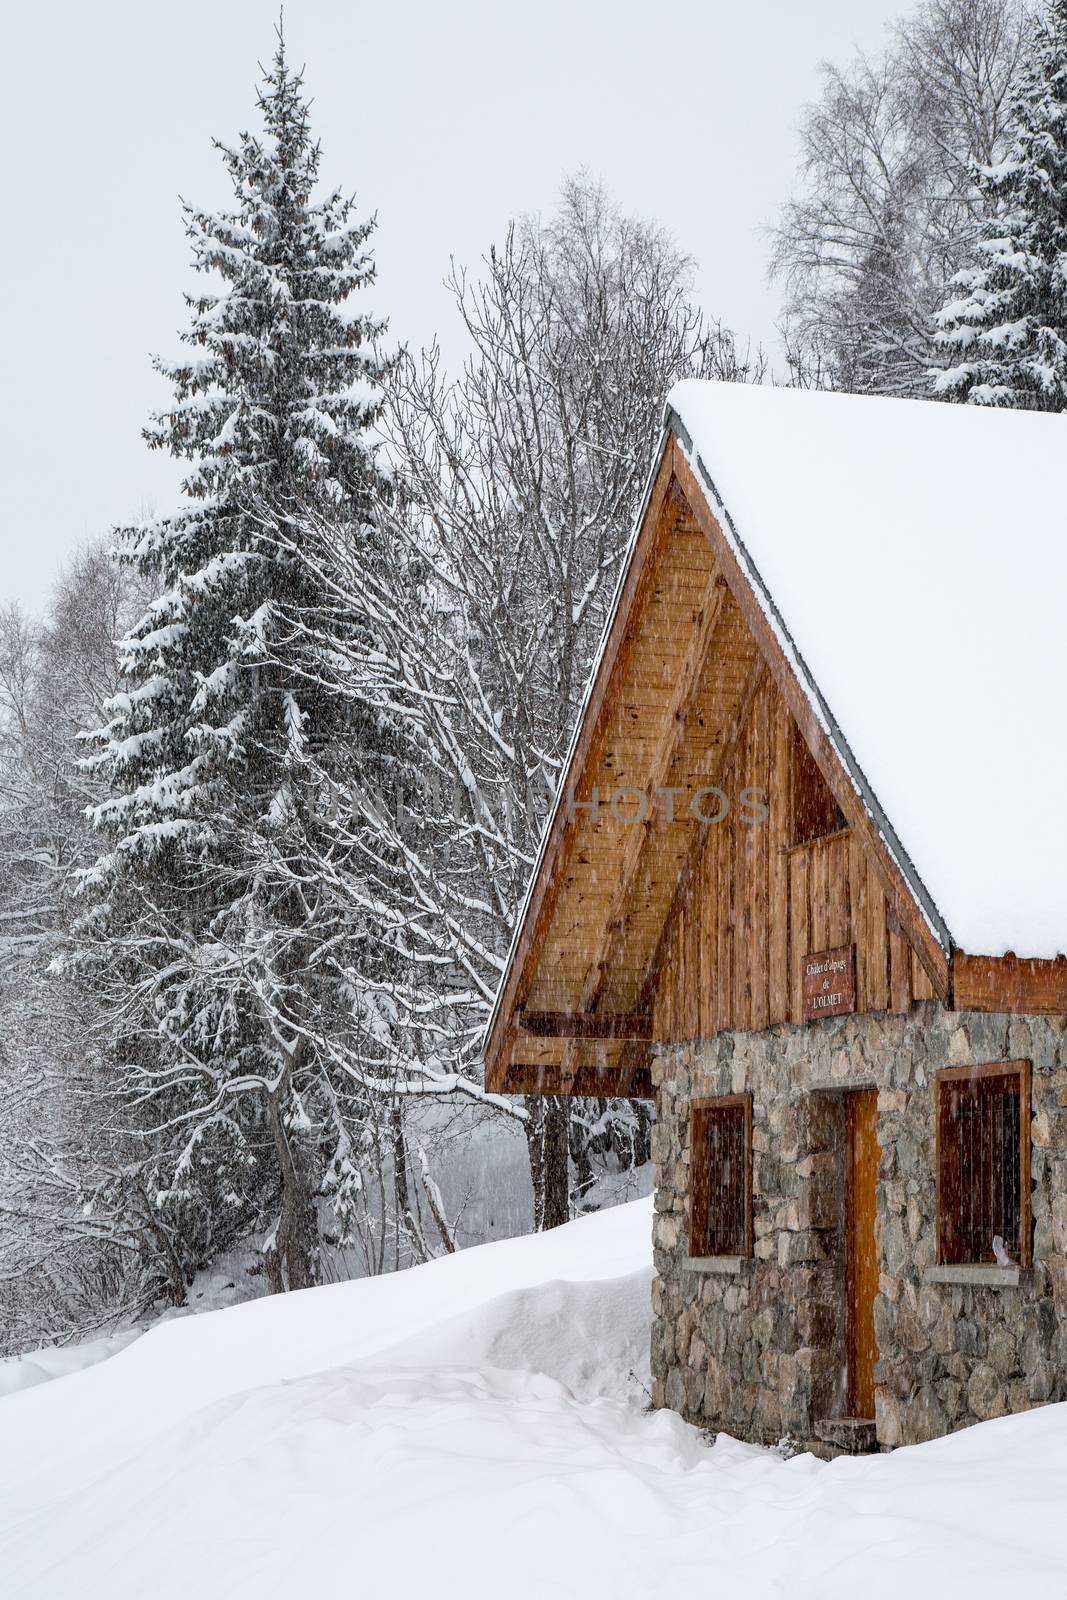 Chalet in winter by Kartouchken